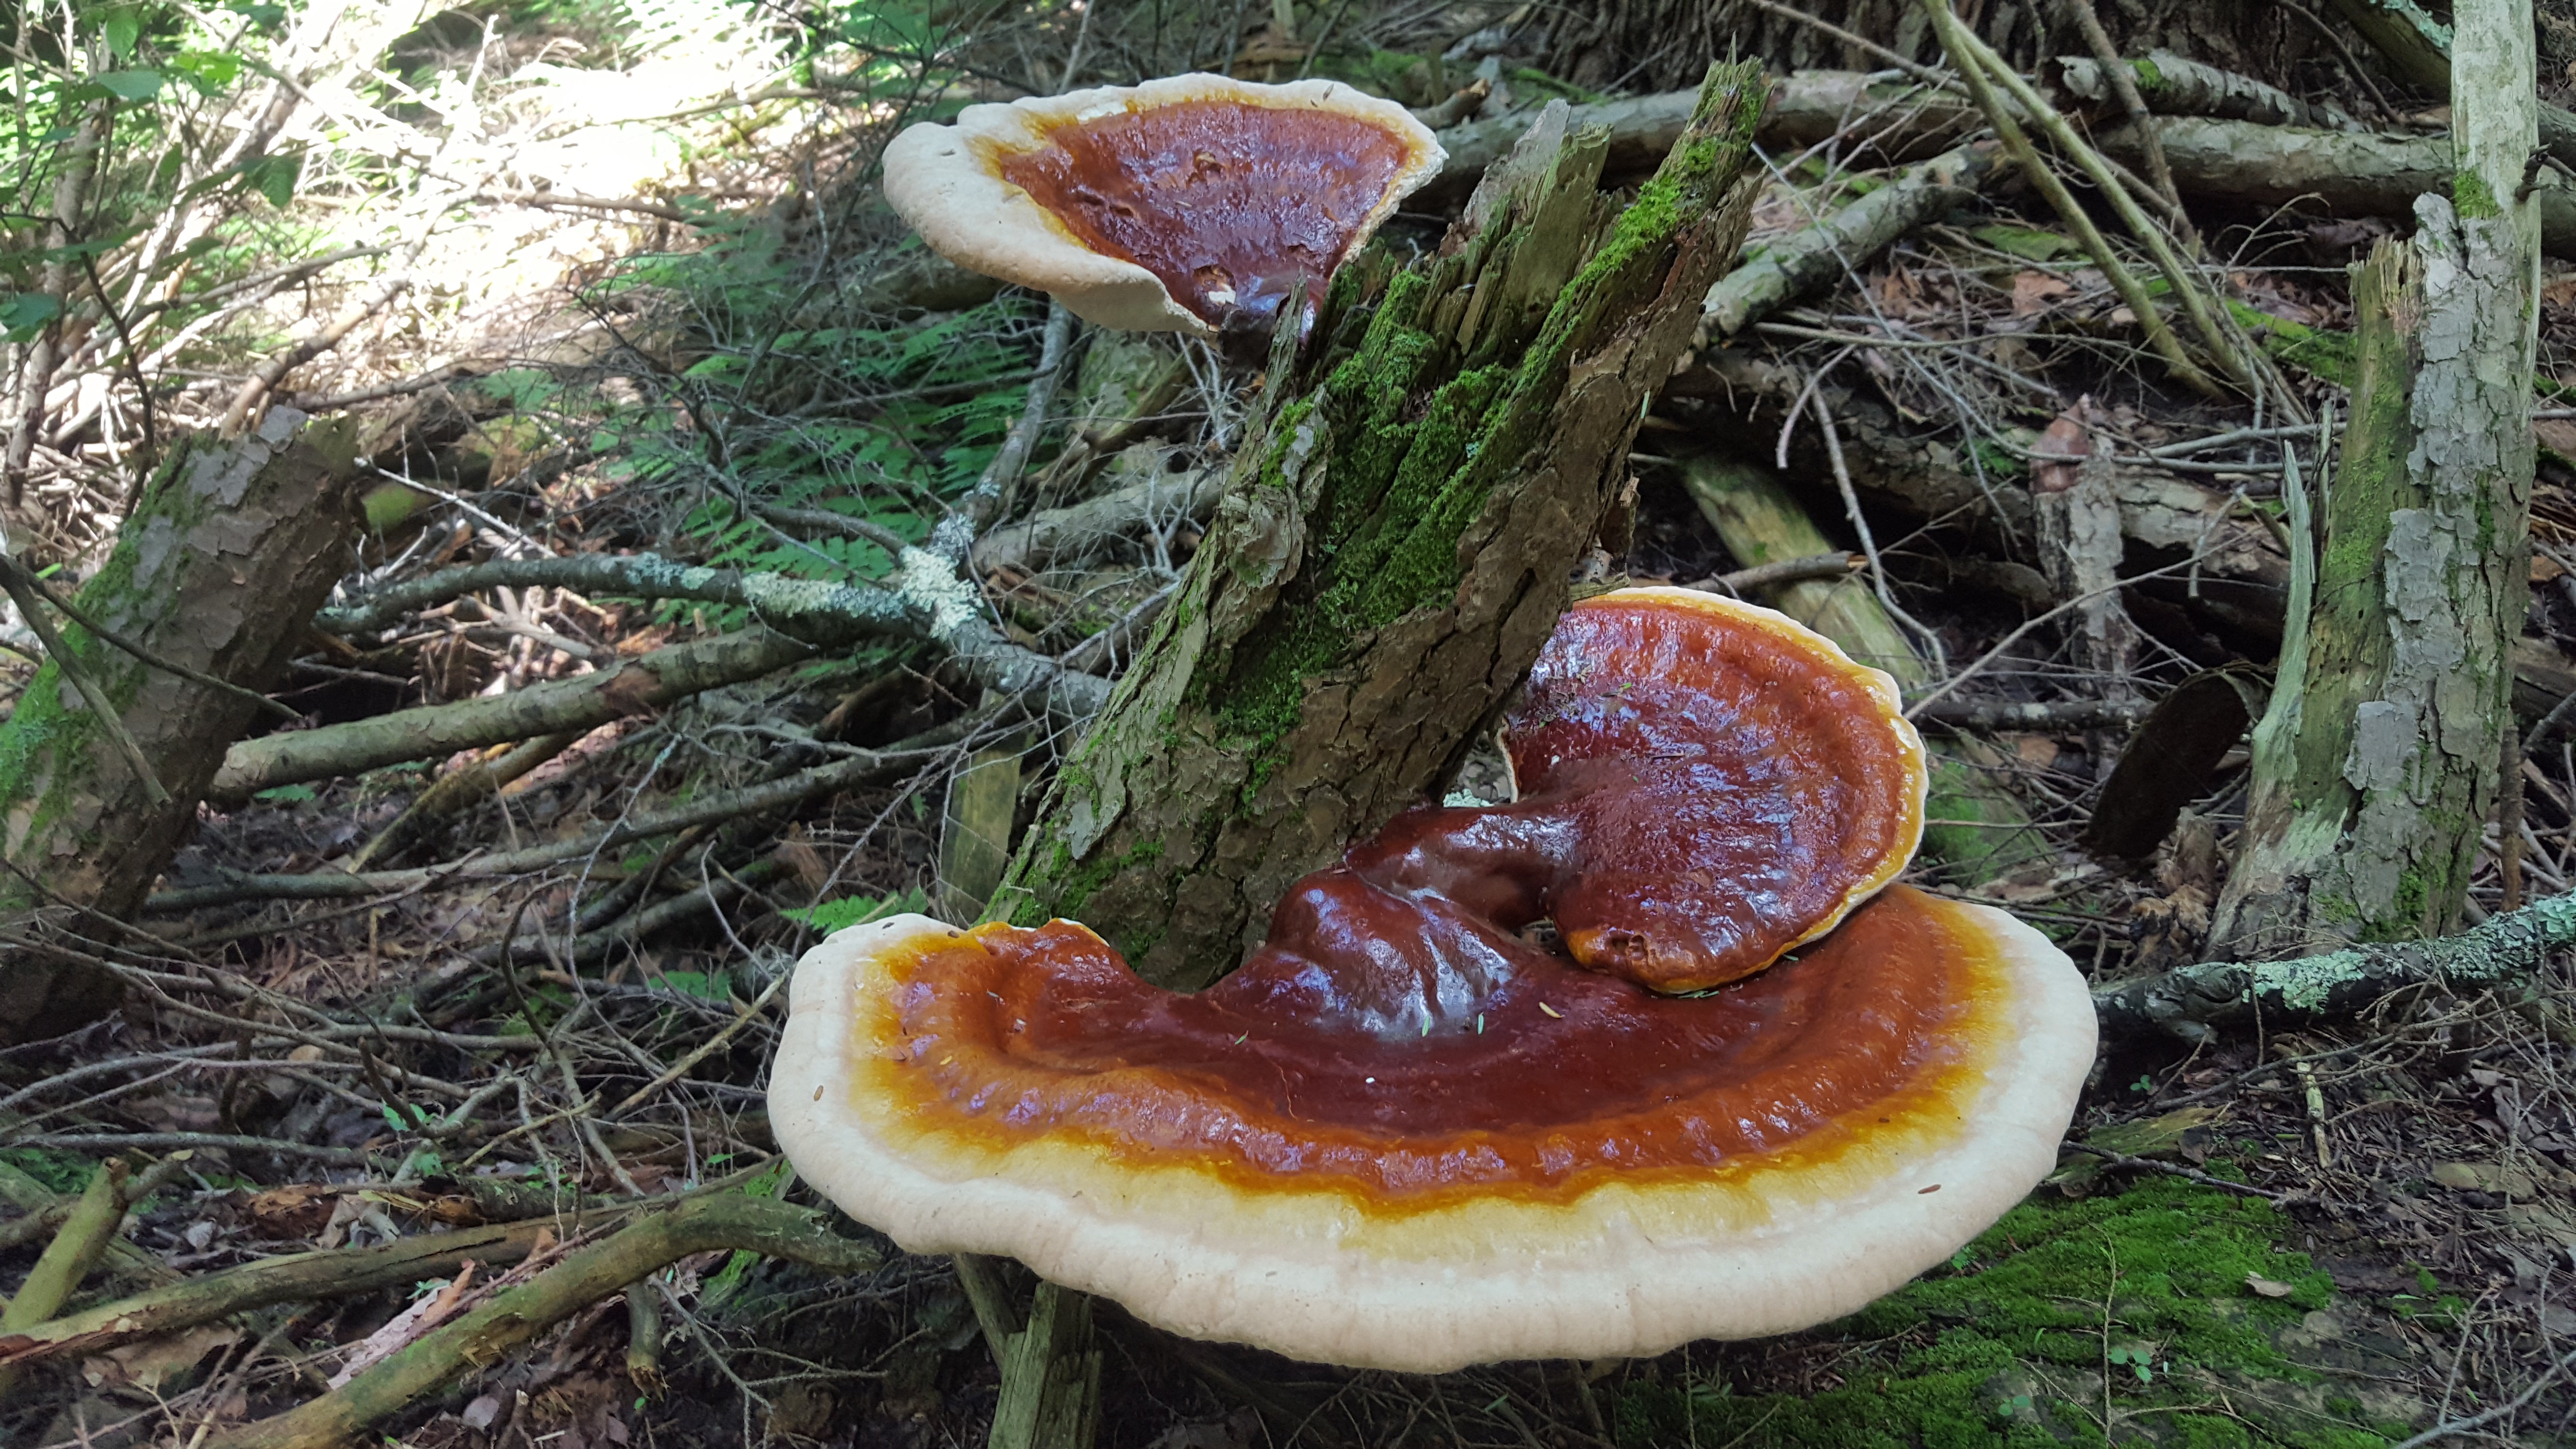 Immature Reishi mushrooms (Ganoderma tsugae) growing in a hemlock log.